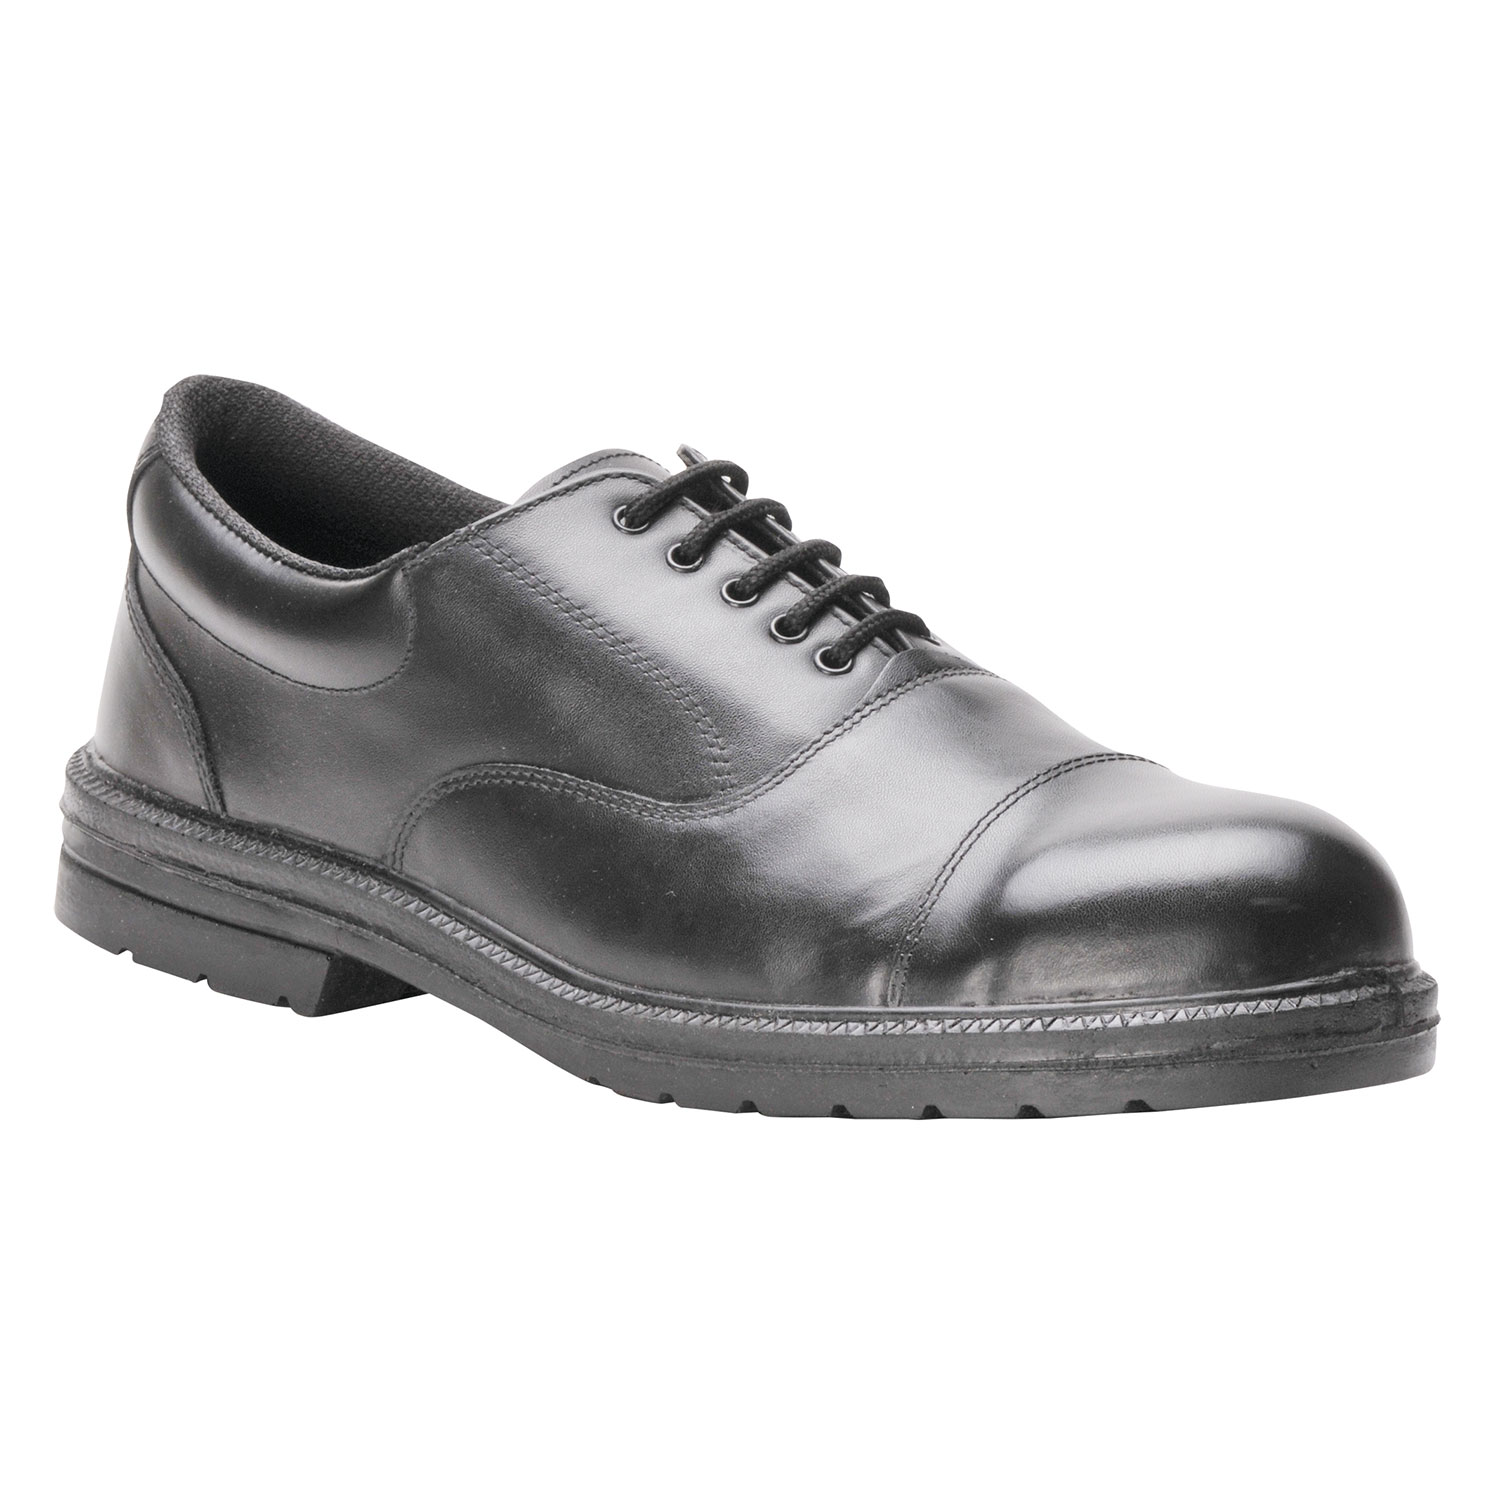 Steelite Executive Black Oxford Safety Shoes - Protrade